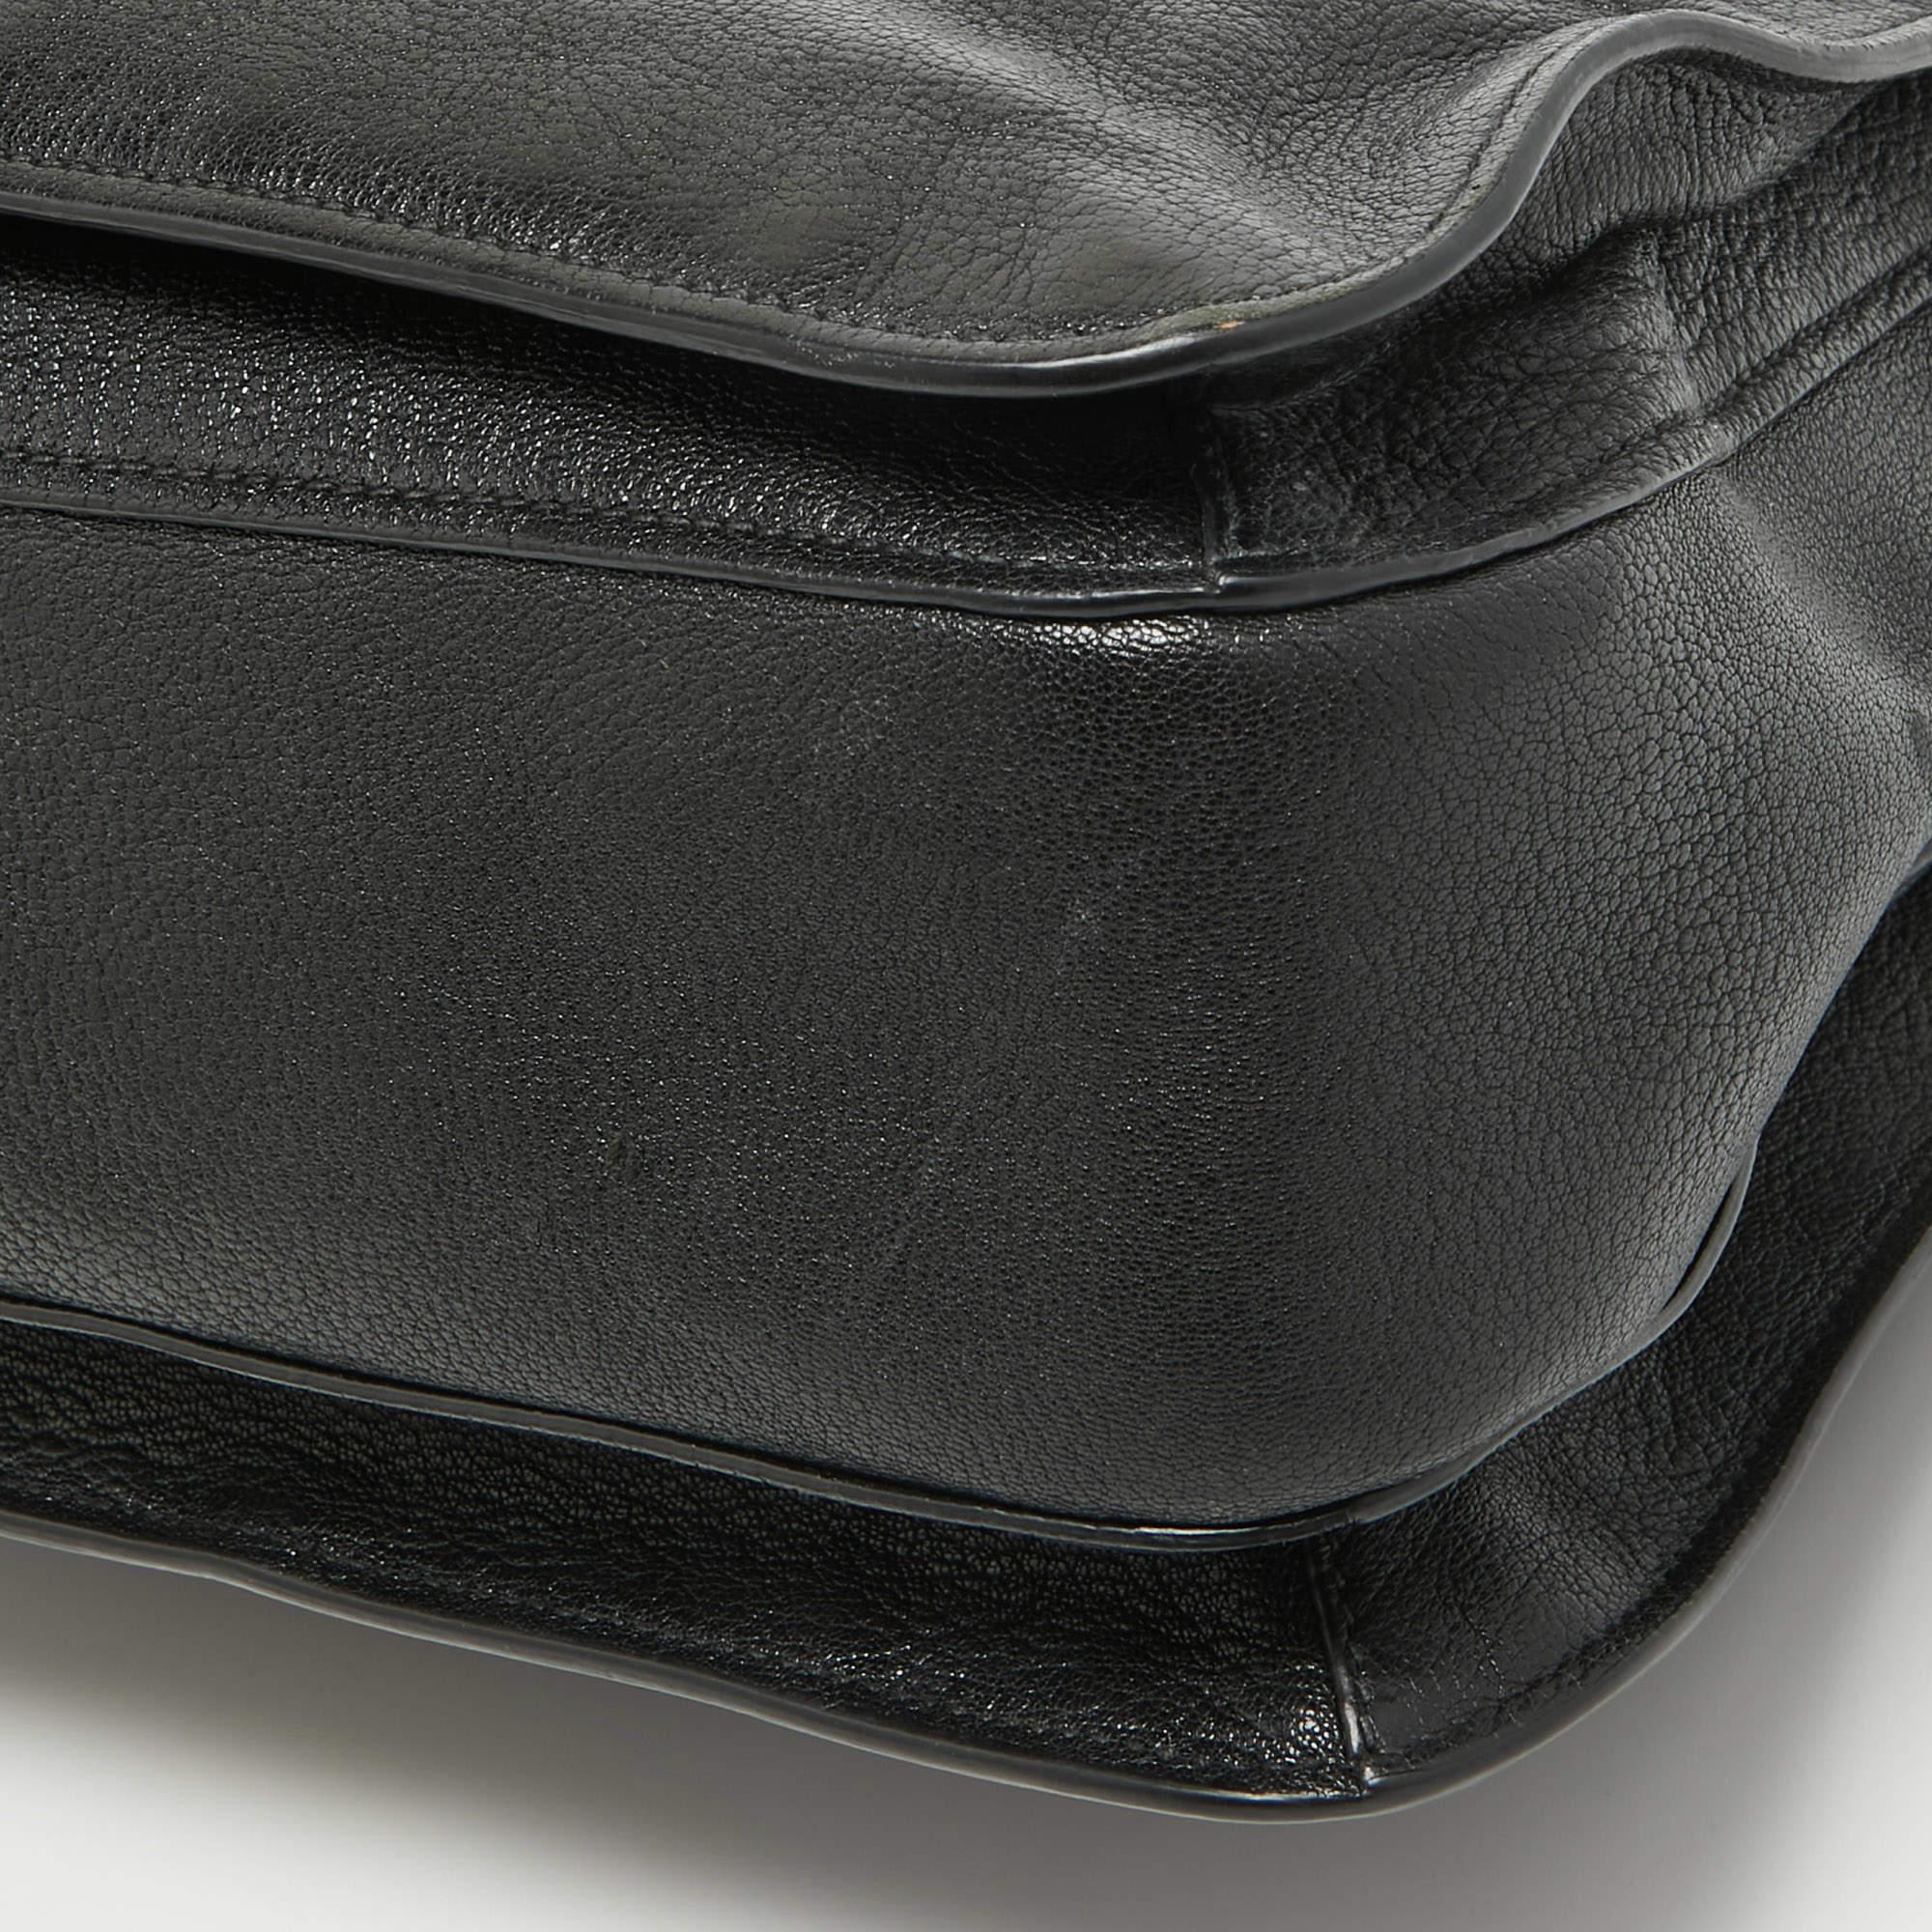 Miu Miu Black Madras Leather Pushlock Tote For Sale 3